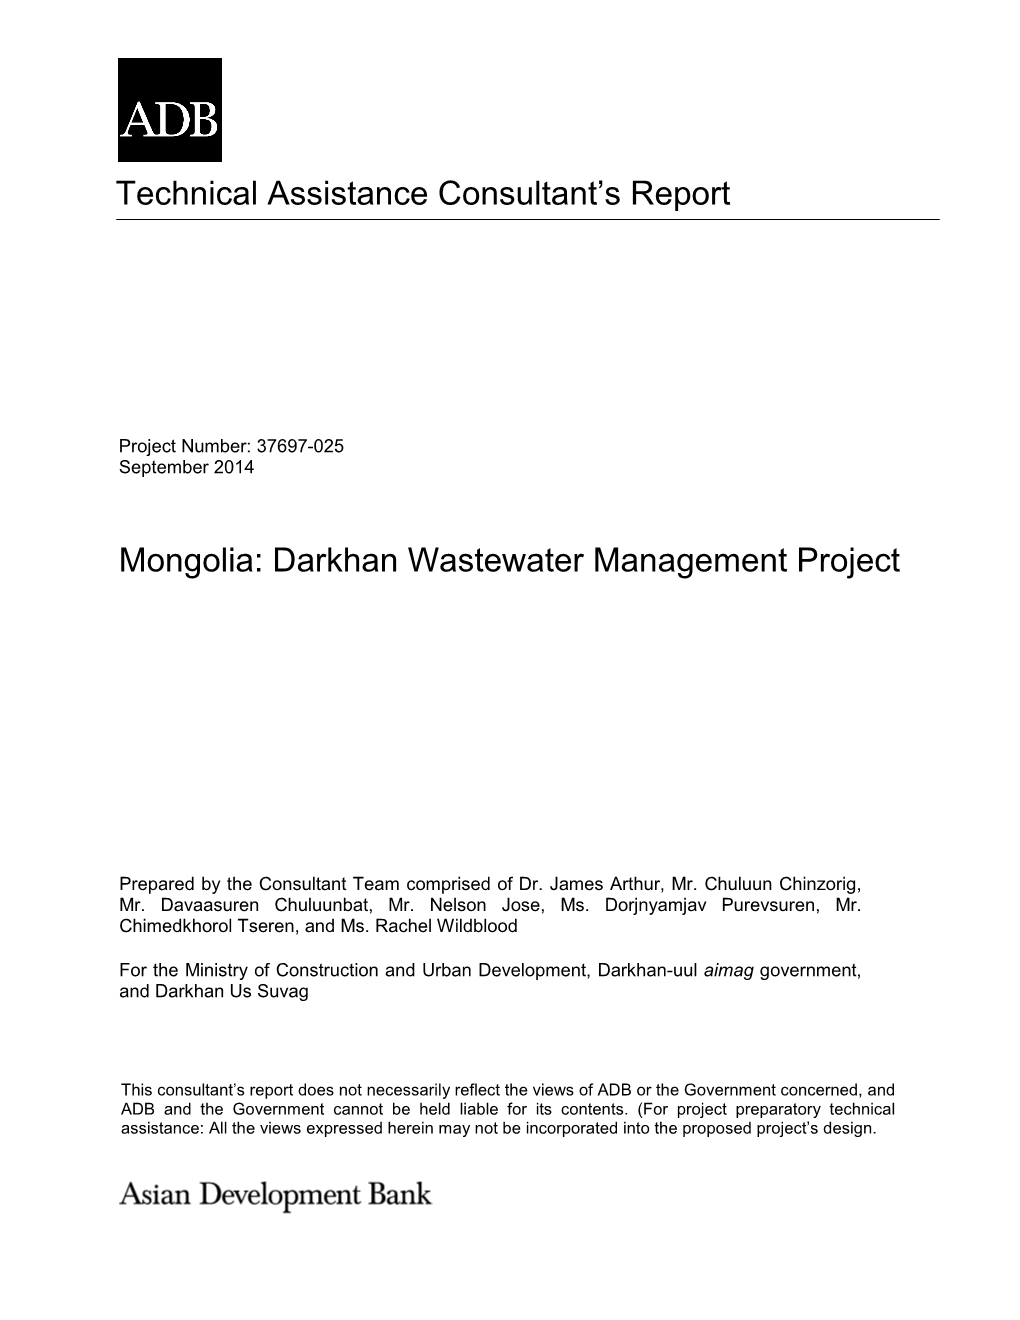 Darkhan Wastewater Management Project